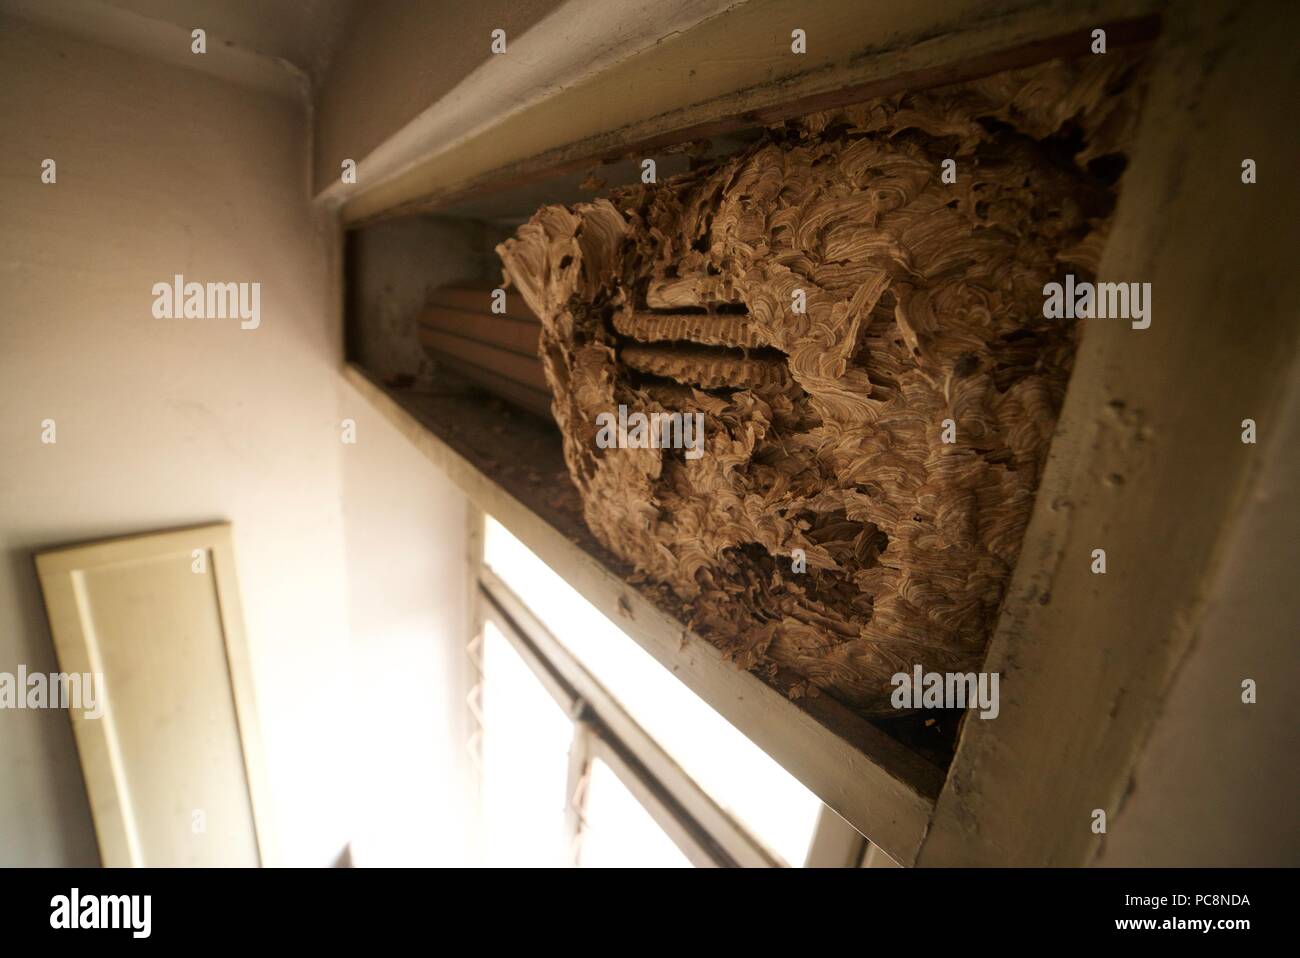 Huge Old Wasp Nest Inside A House On Some Pipes Wasp Nest Inside A House Loft Stock Photo Alamy